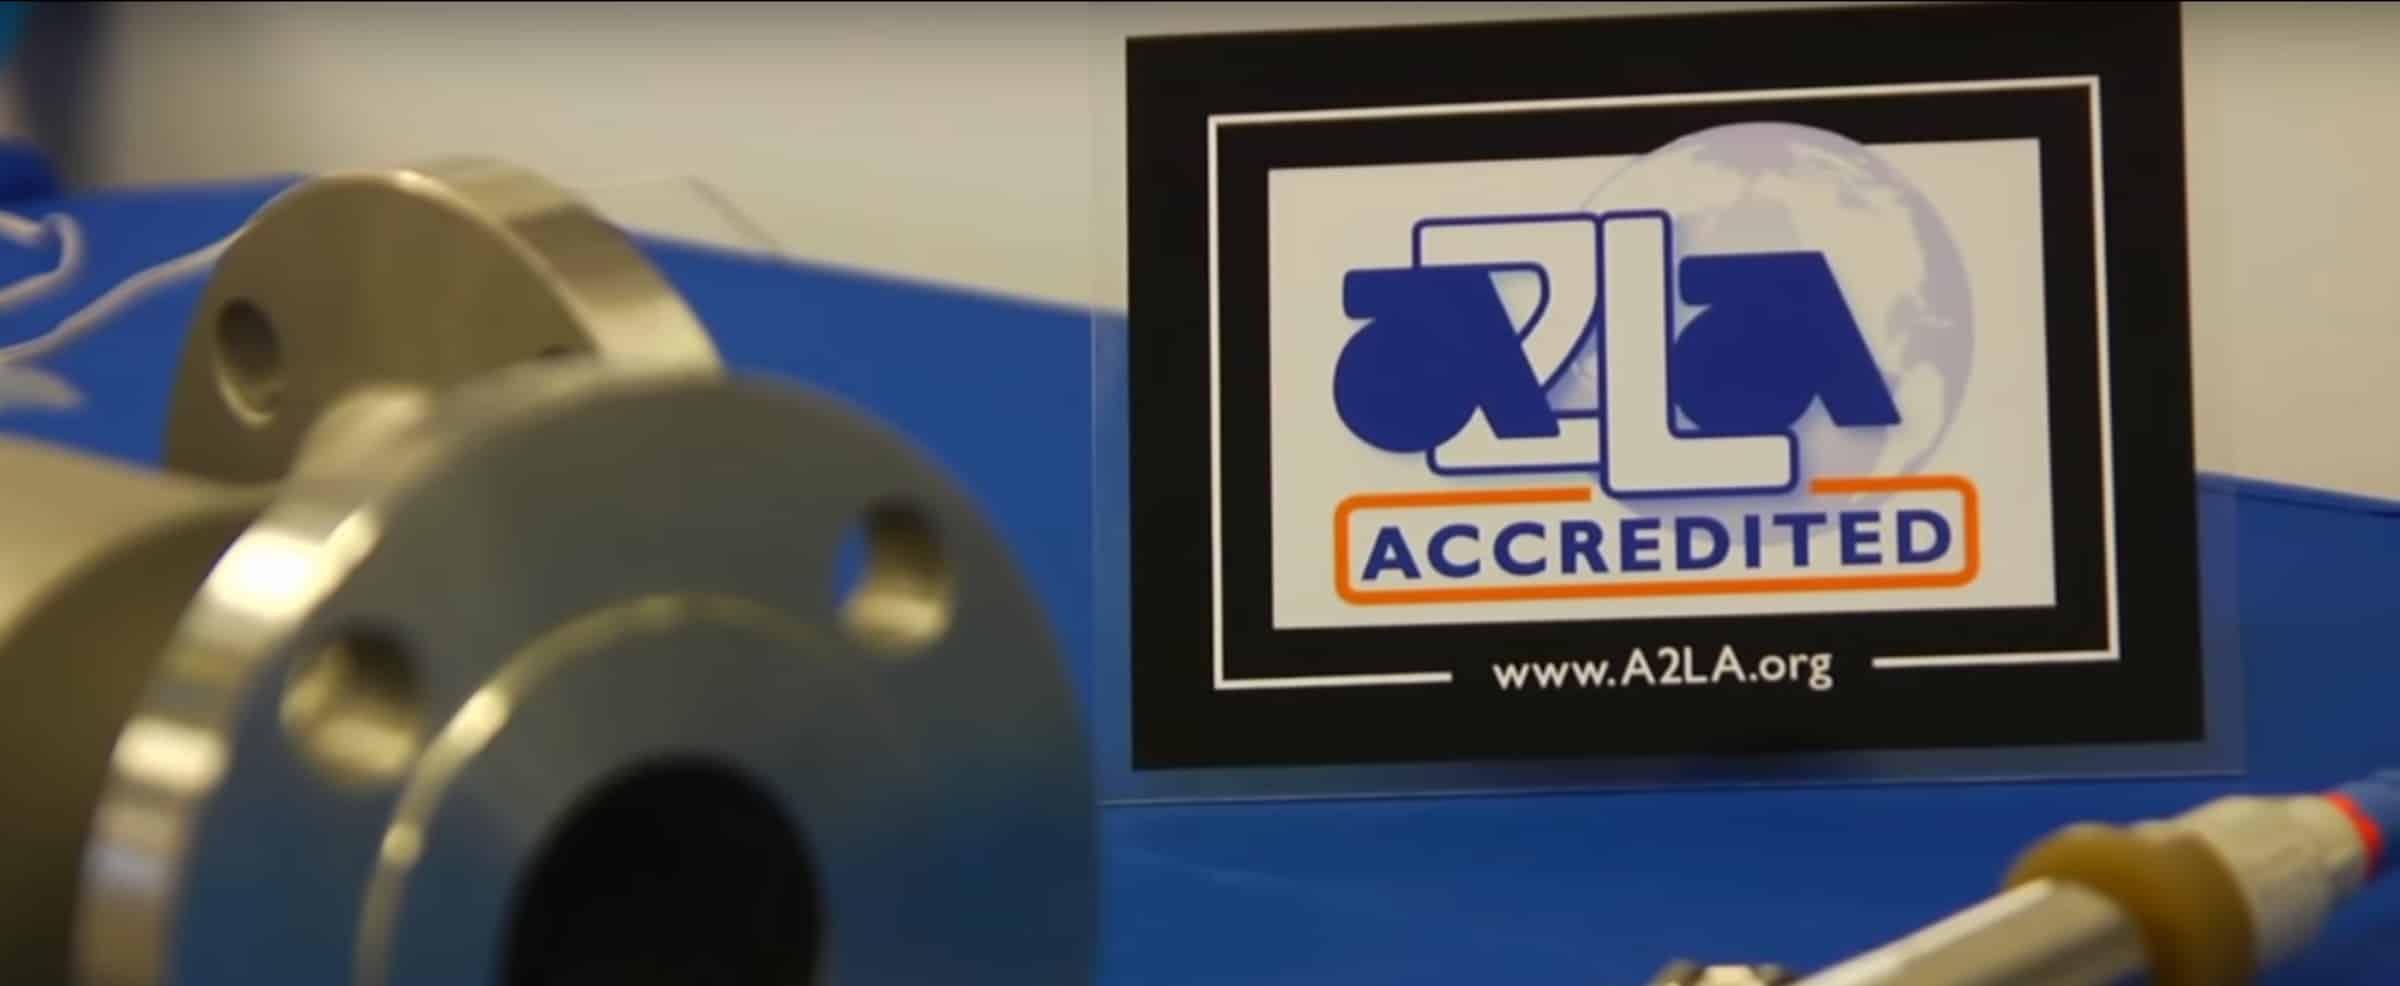 Product A2LA 17025 Accredited Calibration Laboratory – J&W Instruments Inc. image